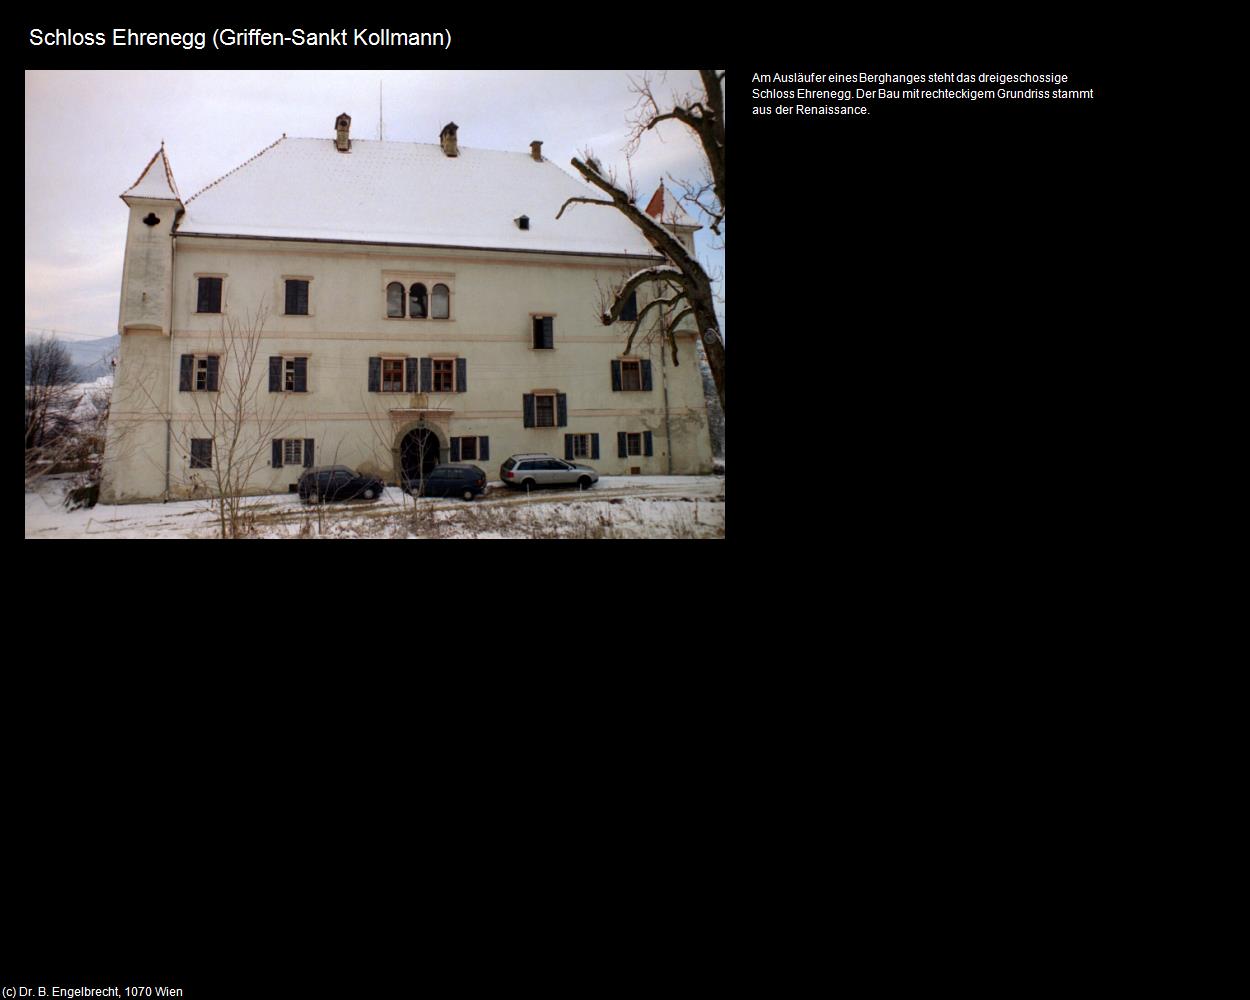 Schloss Ehrenegg (Sankt Kollmann) (Griffen) in Kulturatlas-KÄRNTEN